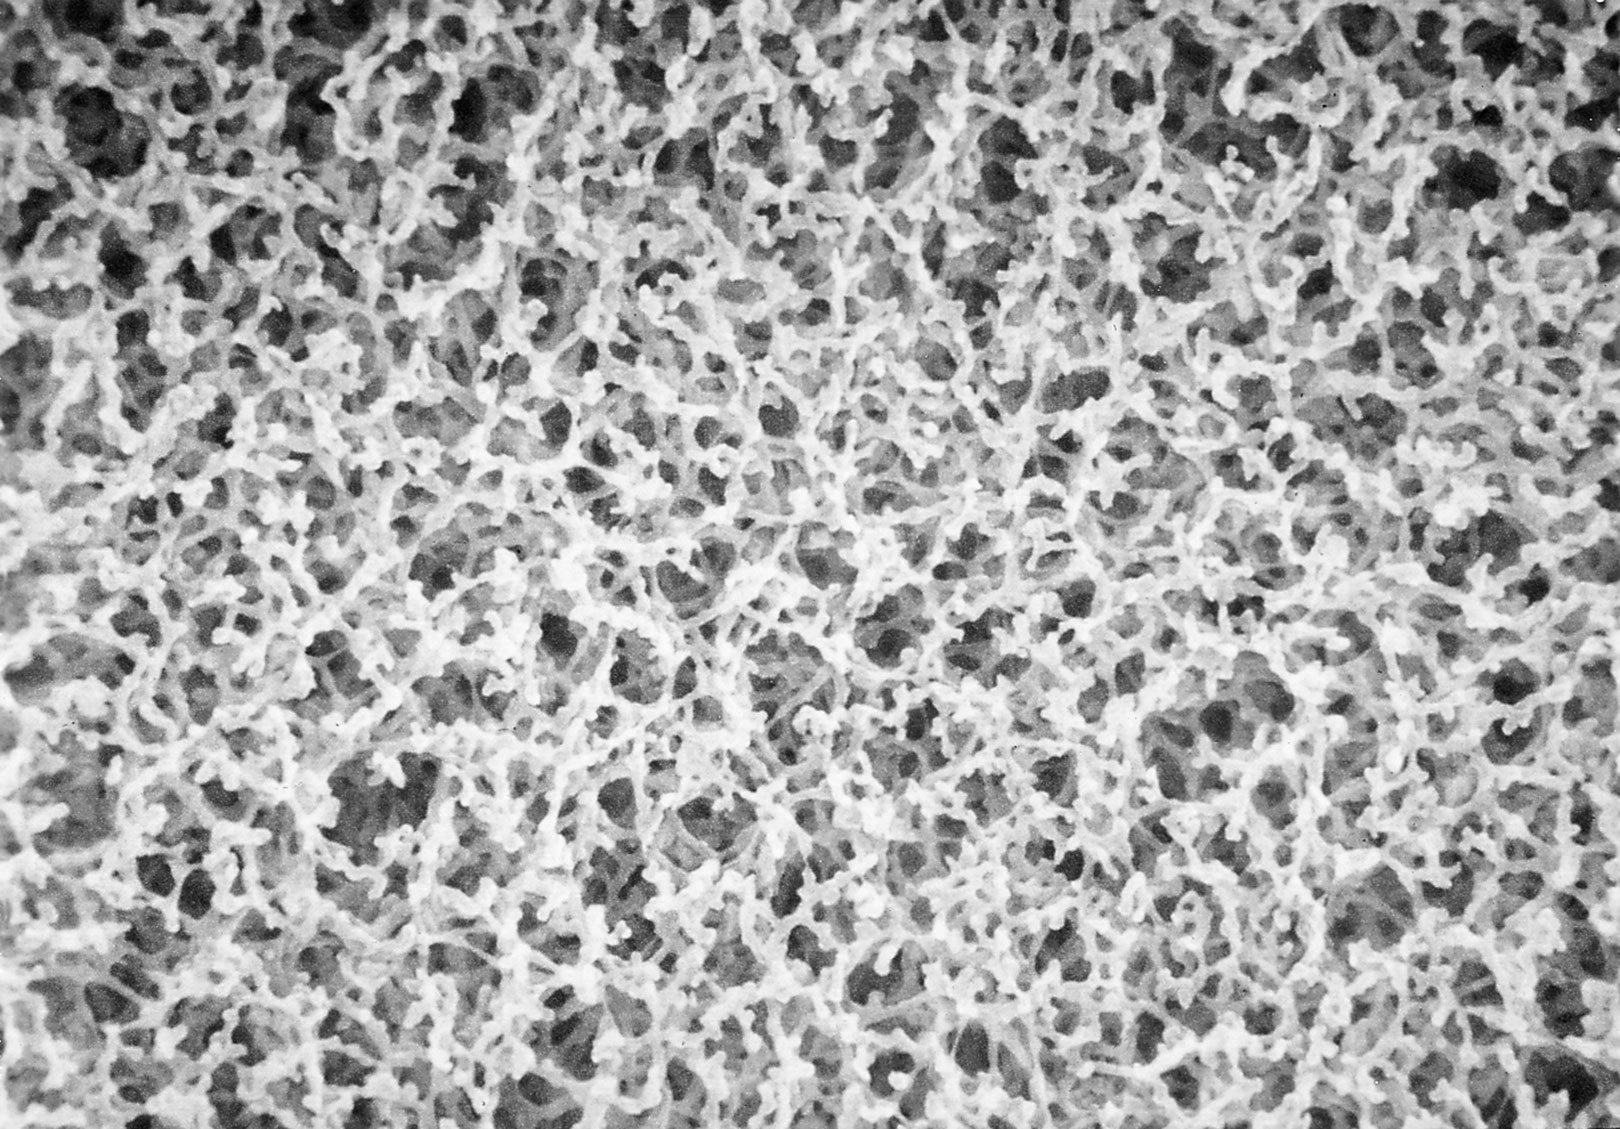 Membrana de ésteres mezclados de nitrocelulosa. GVS. Material: ME. Ø (mm): 47. Tamaño poro (µm): 1,2. Estéril: No. Cuadrícula: No. Color: Blanca